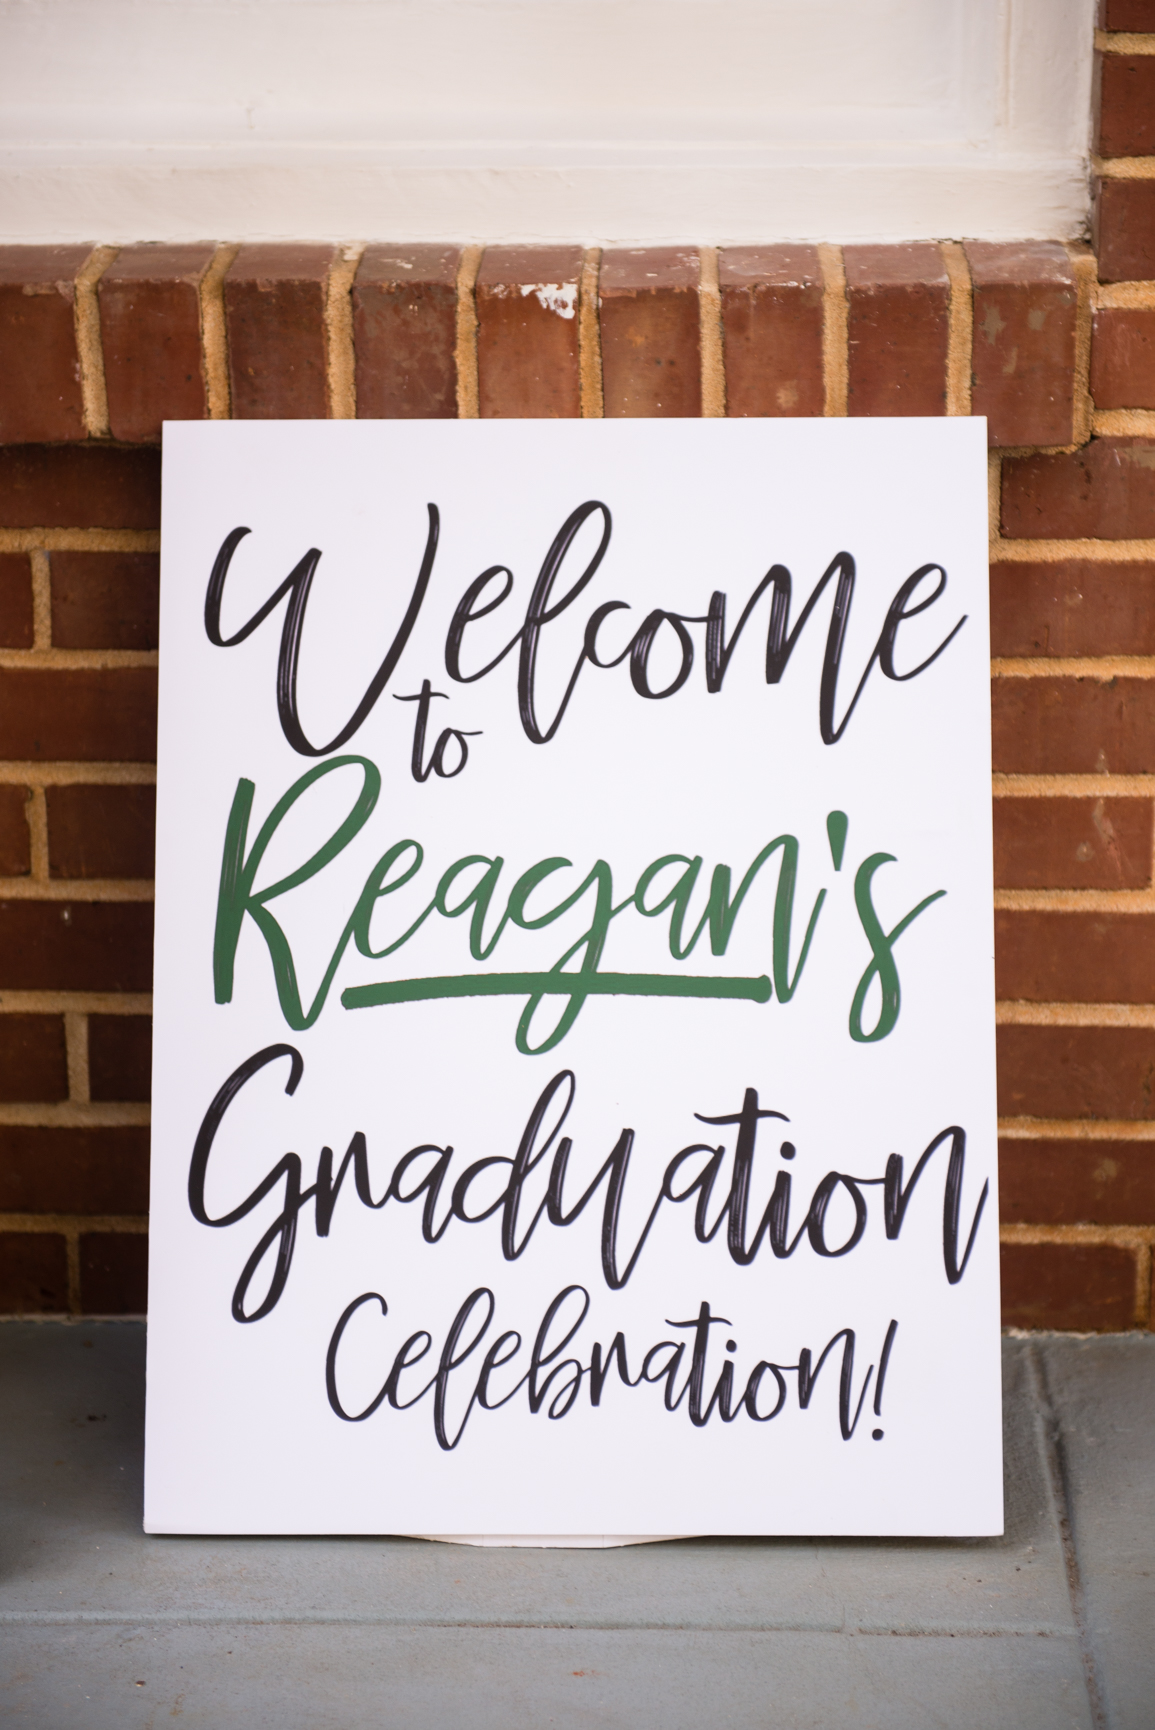 Reagan's Celebration-1